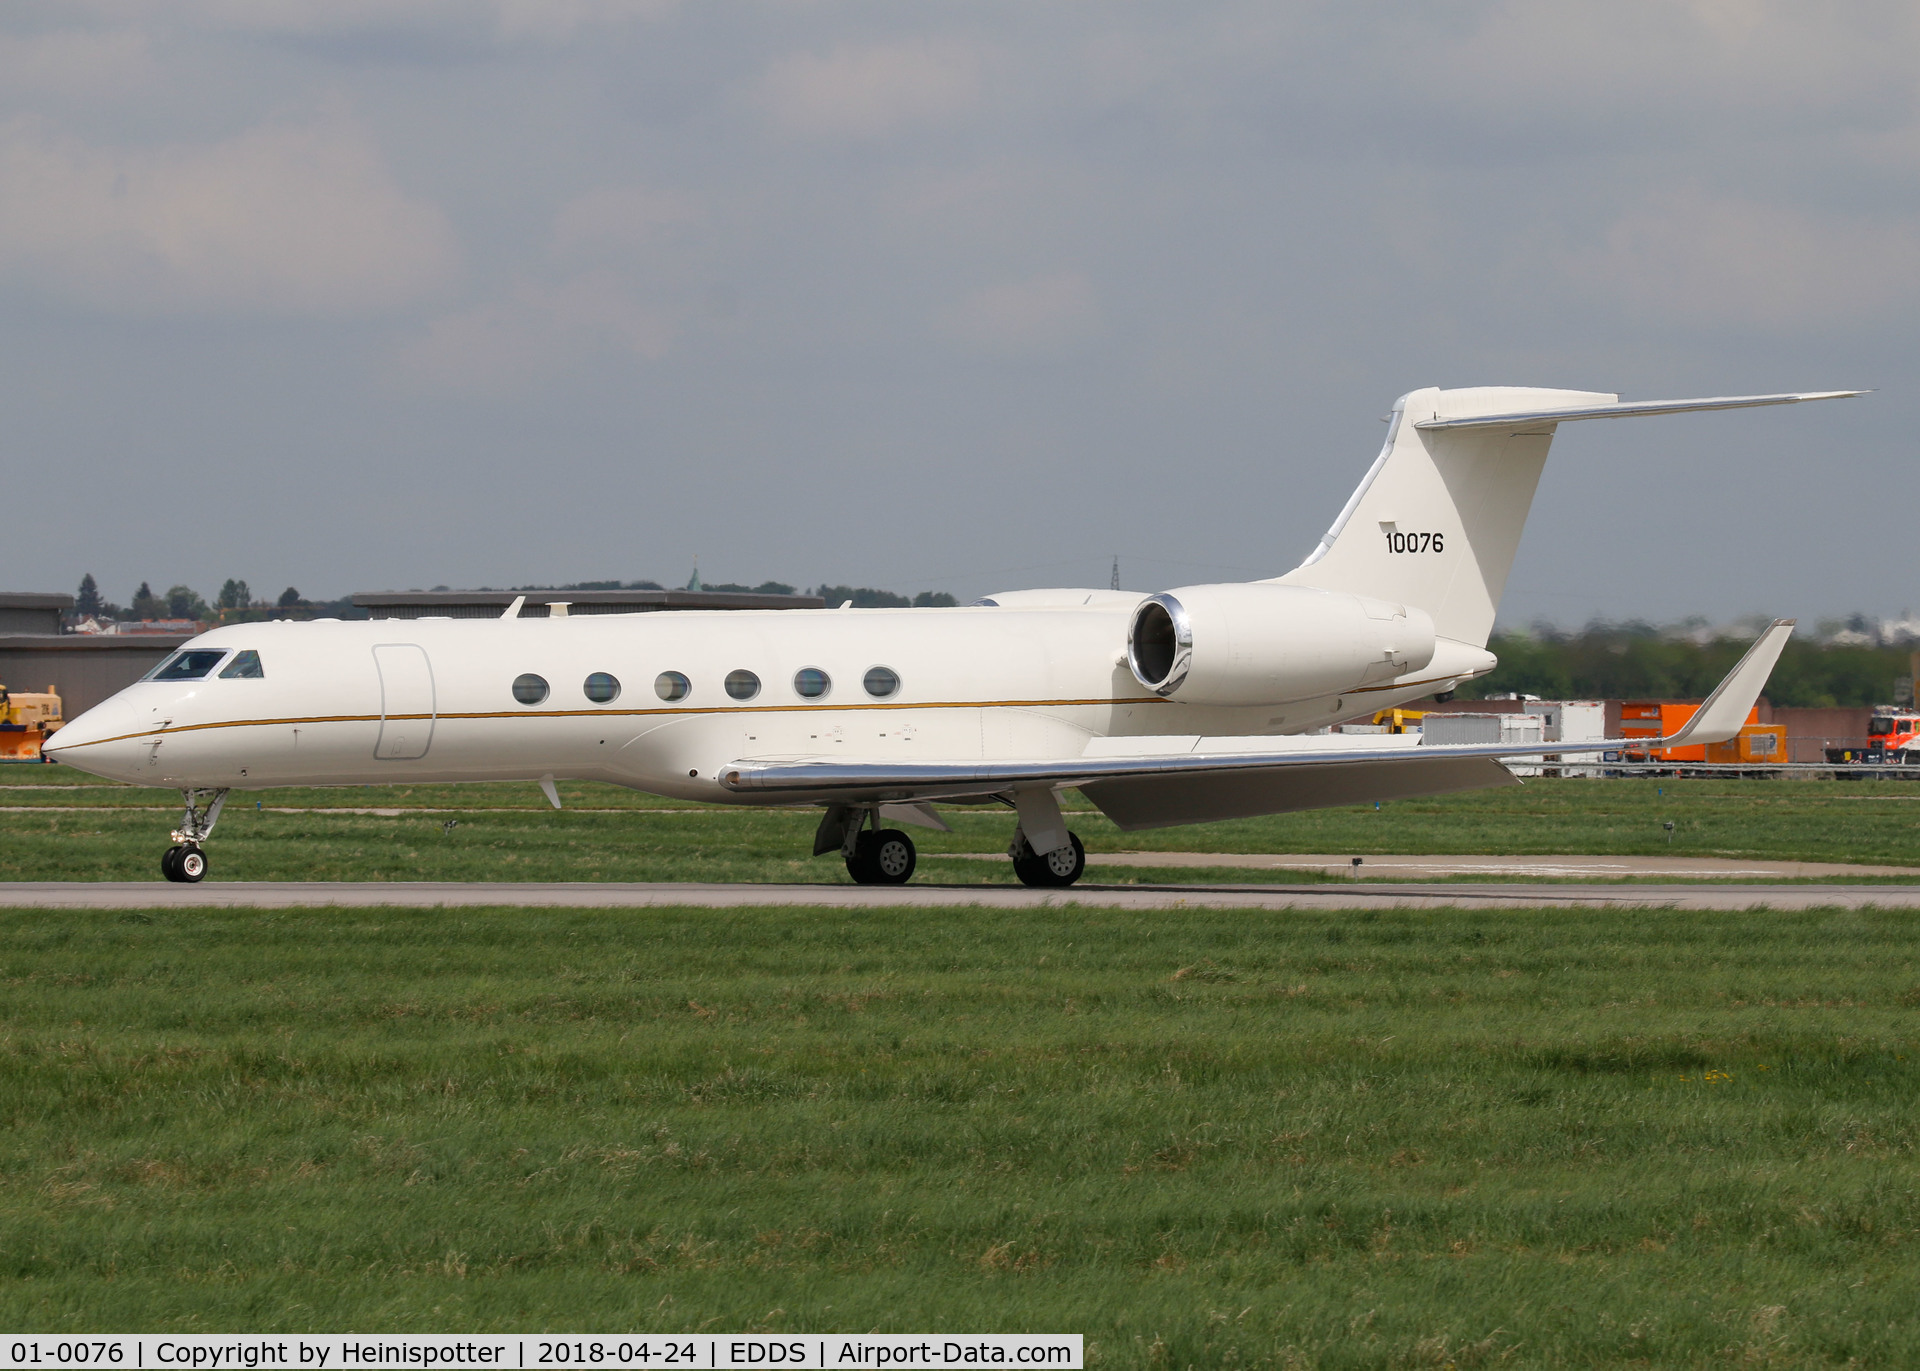 01-0076, 2001 Gulfstream Aerospace C-37A (Gulfstream V) C/N 645, 01-0076 at Stuttgart Airport.